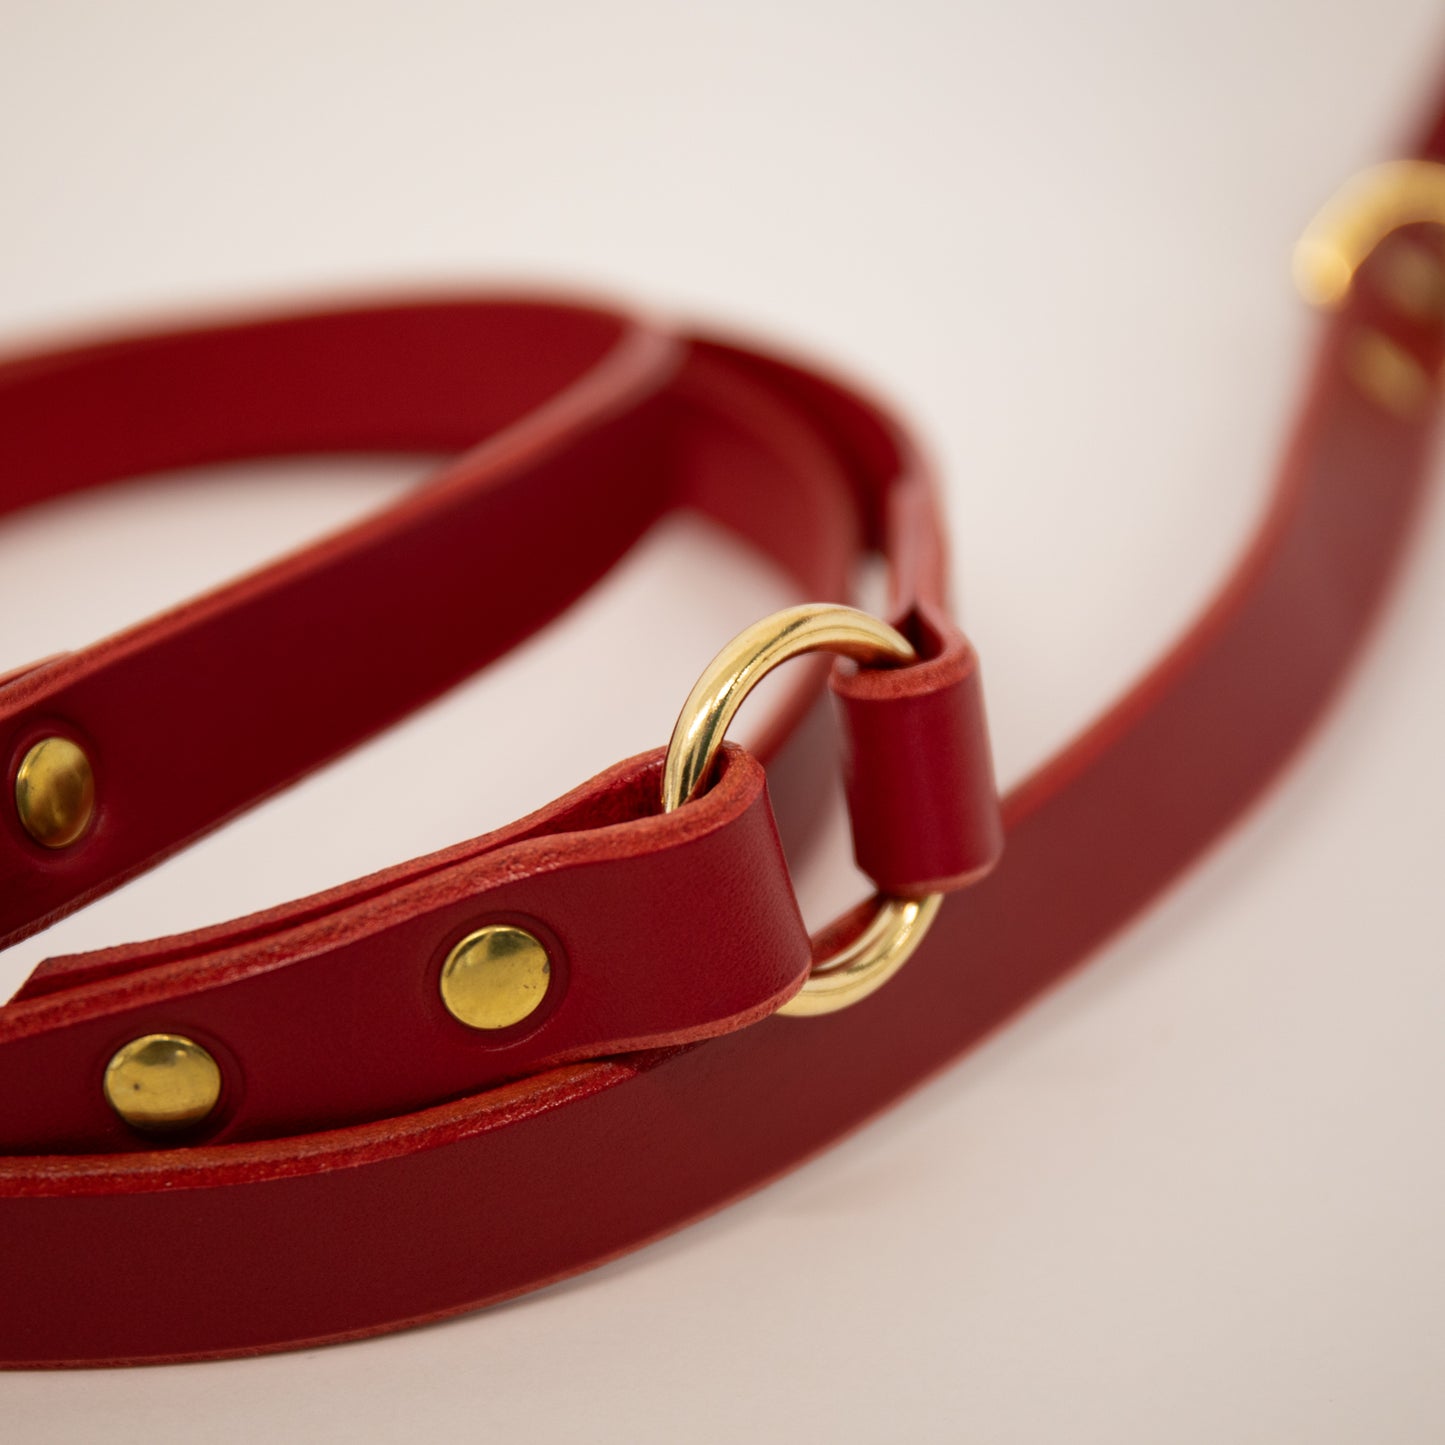 Cranberry adjustable luxury leather lead